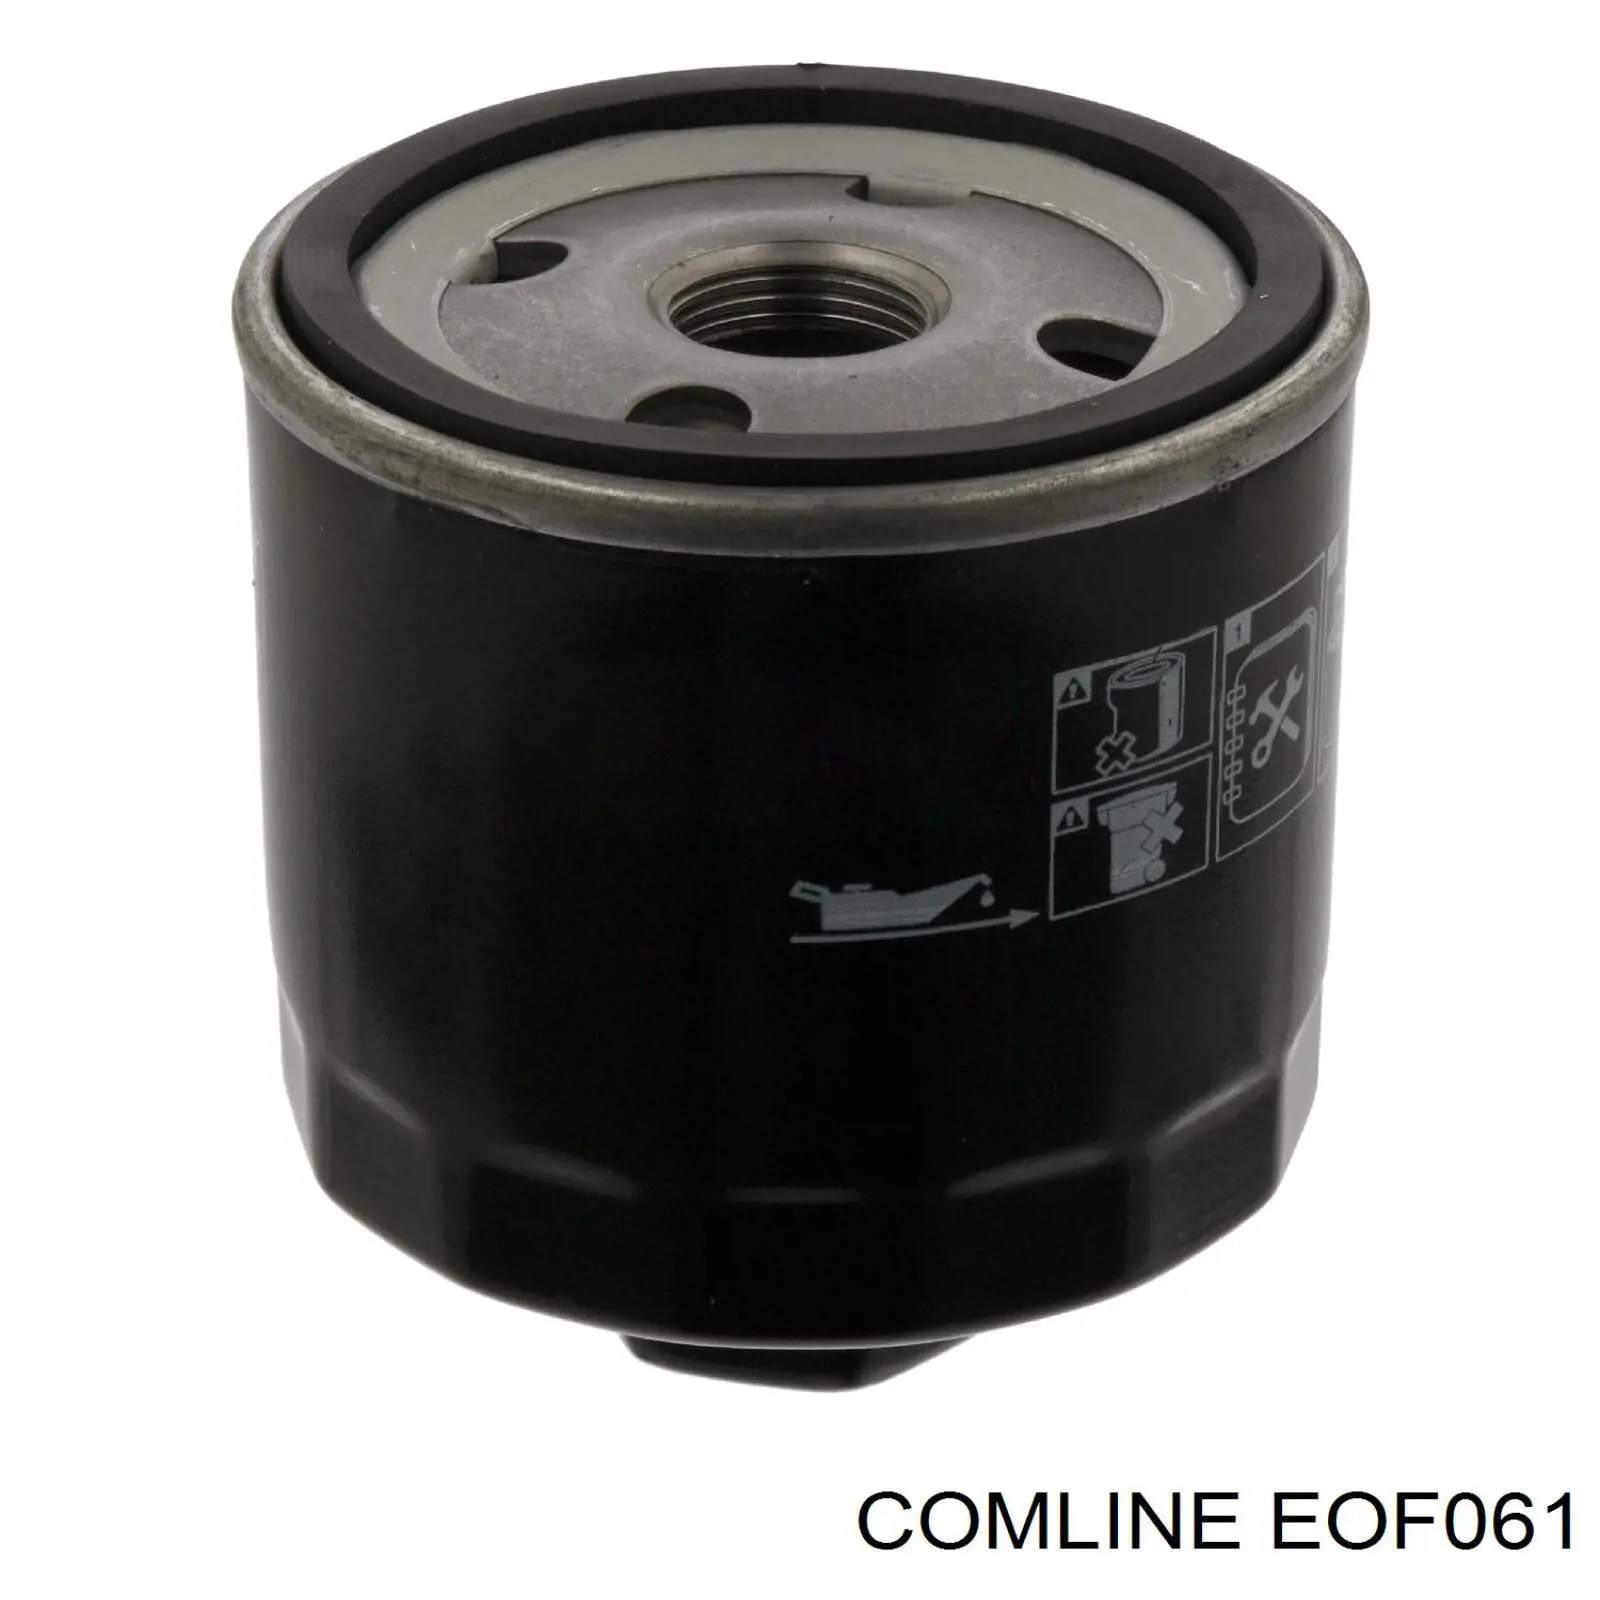 EOF061 Comline filtro de aceite